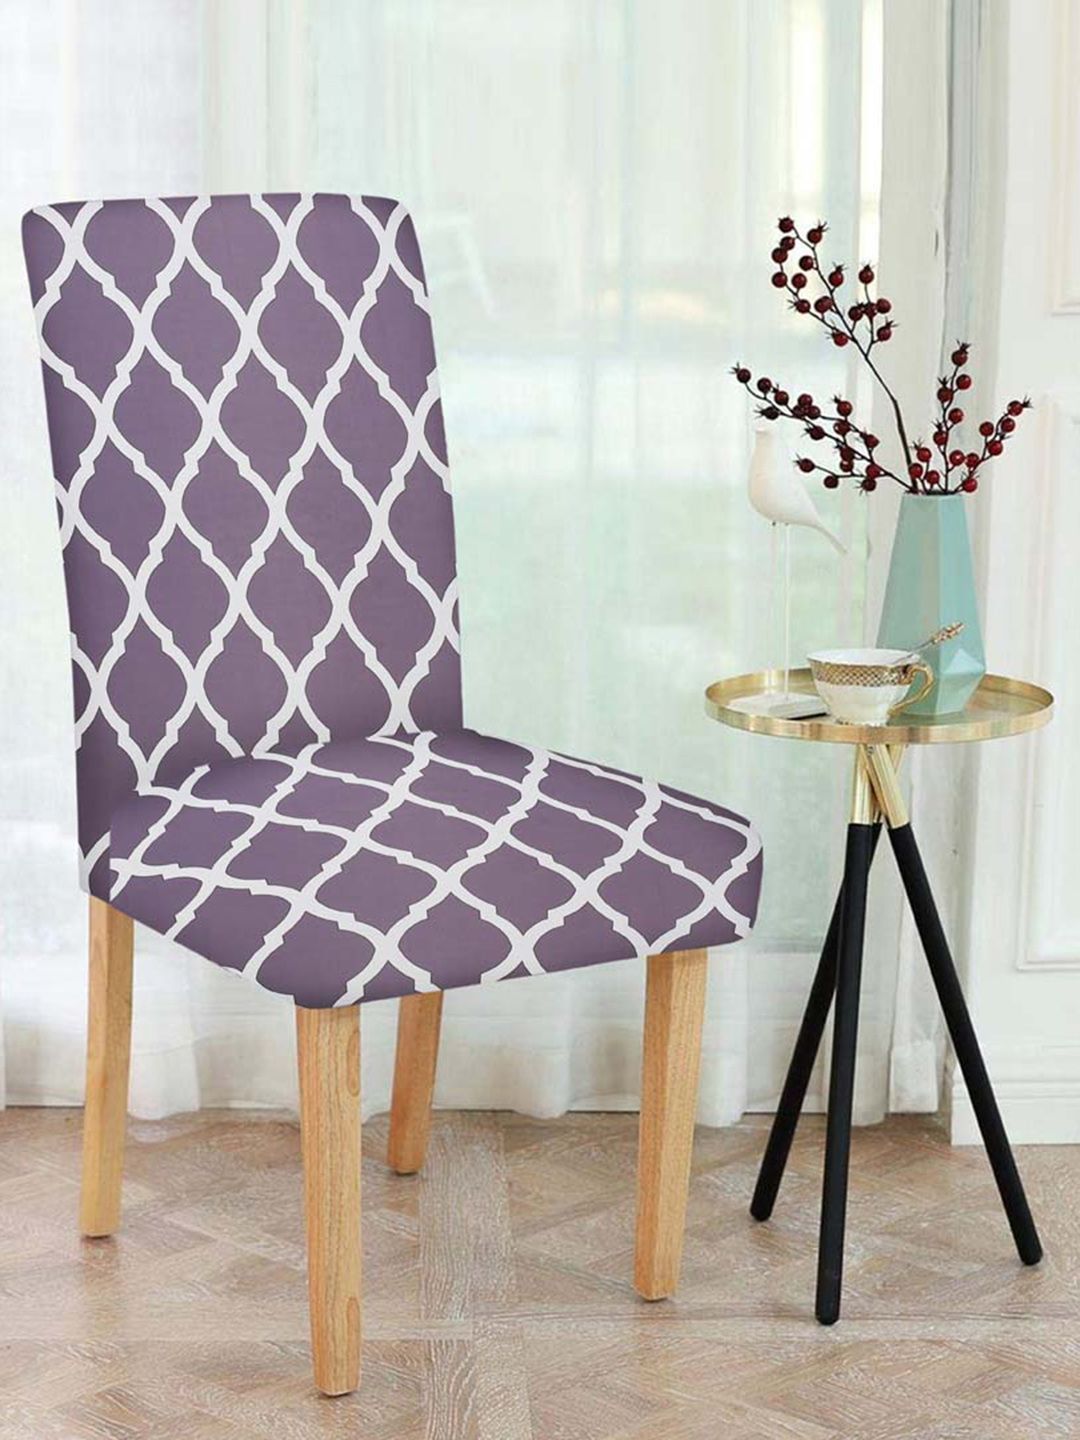 Slushy Mushy Set Of 6 Printed Chair Covers Price in India